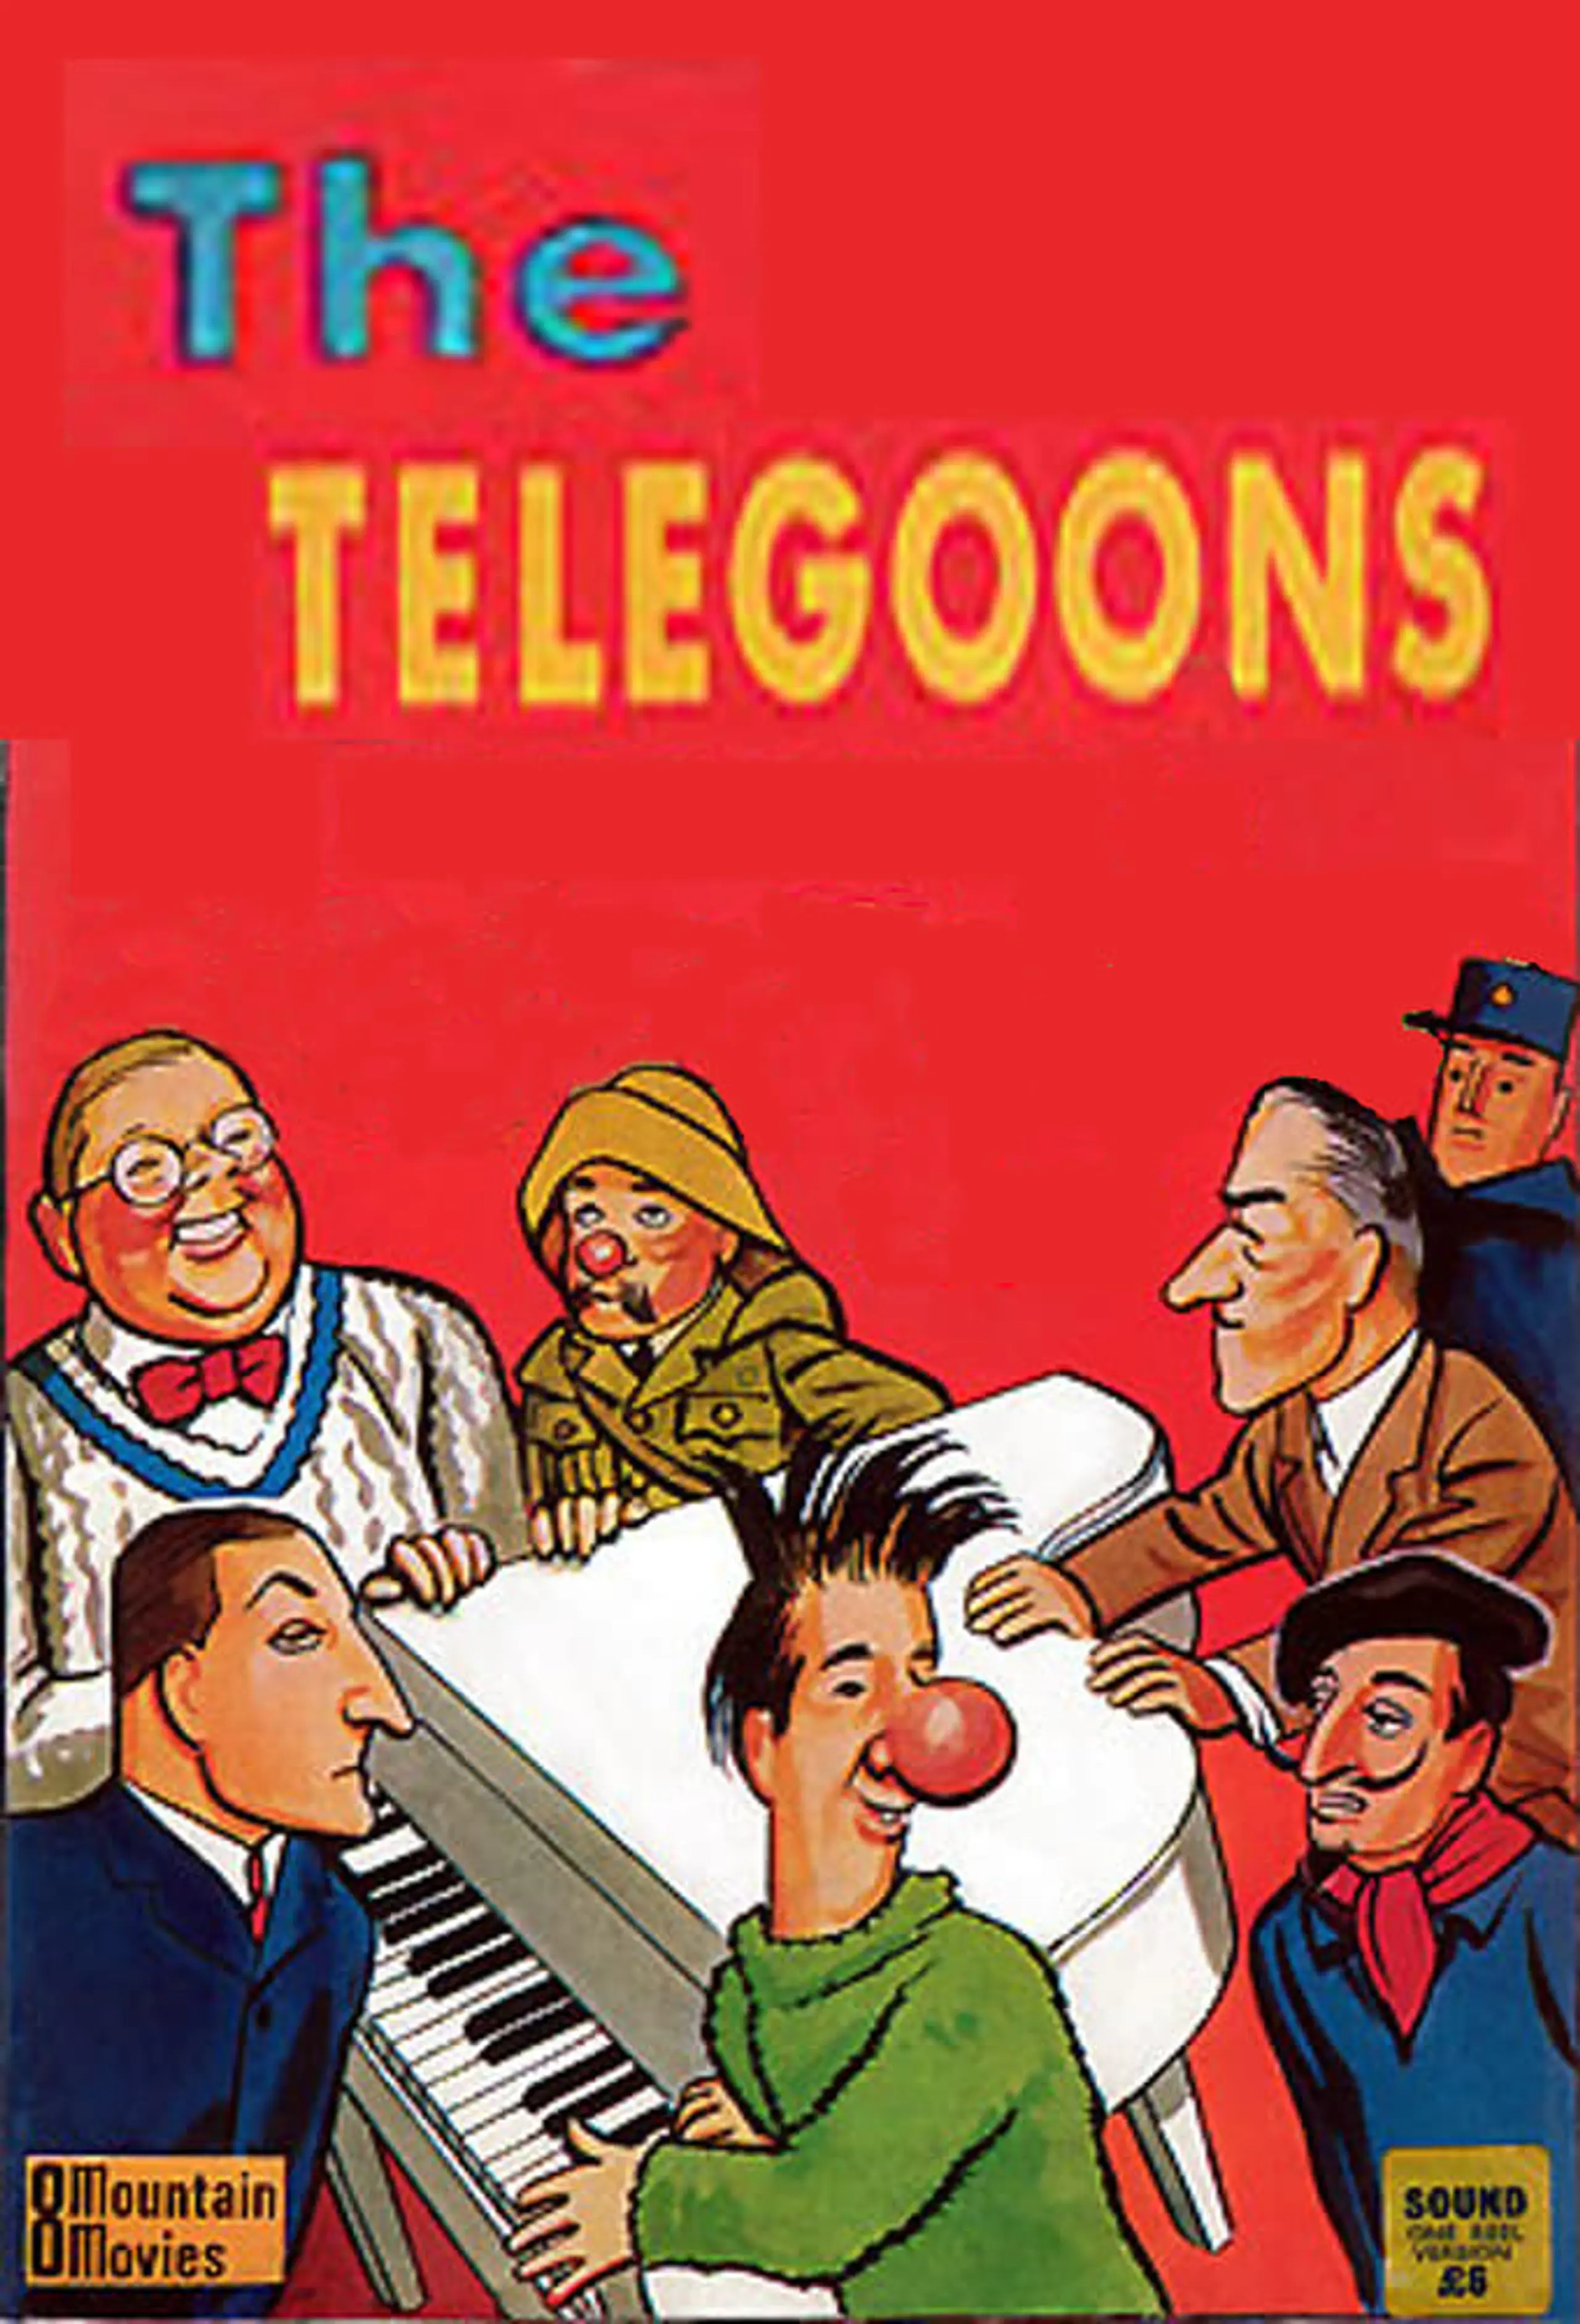 The Telegoons